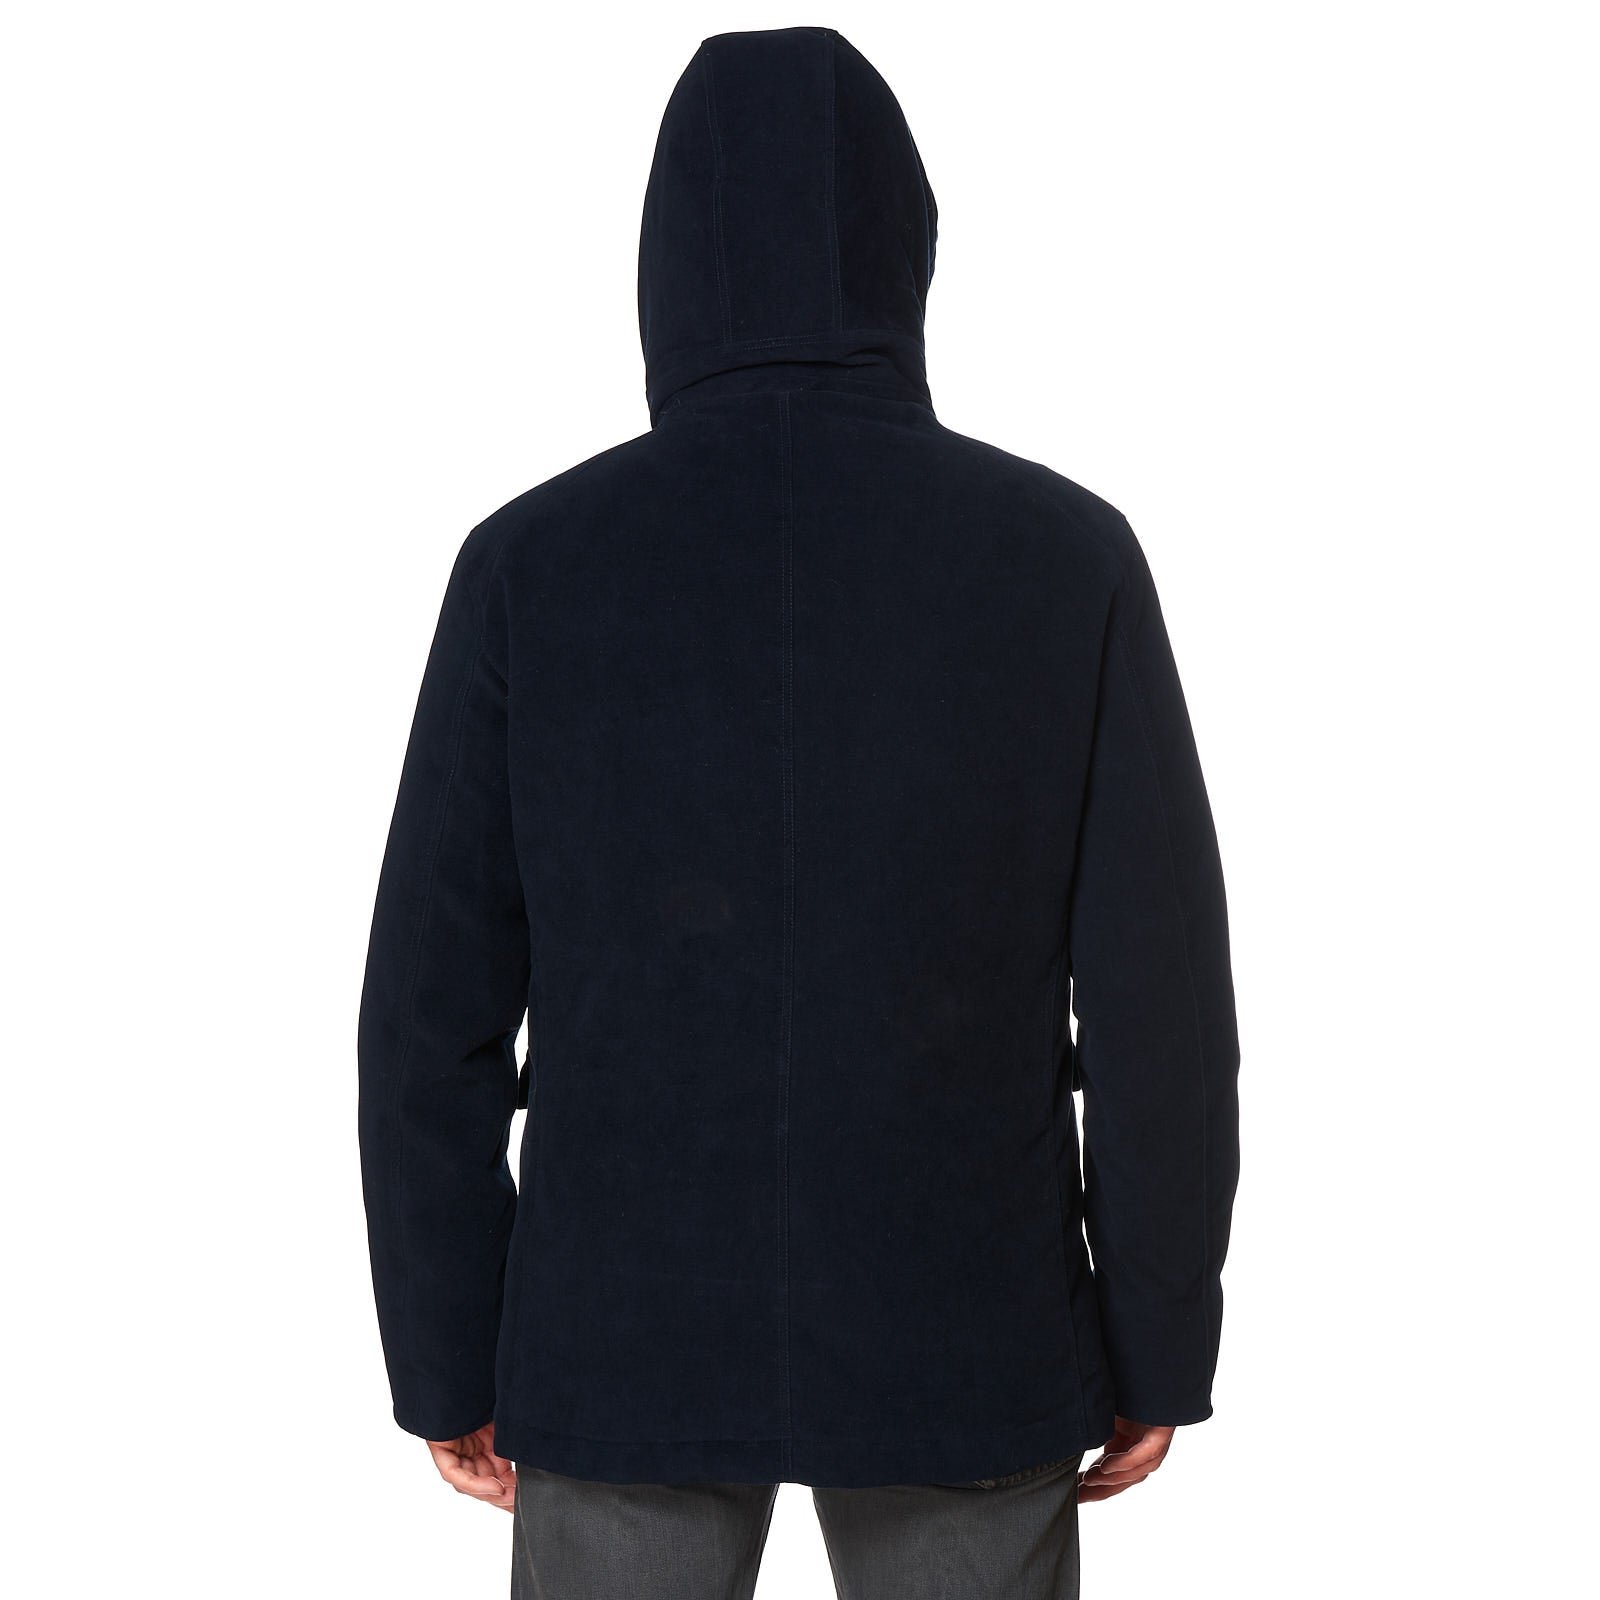 KITON KIRED "Keal" Dark Blue Cashmere Goose Down Padded Hooded Parka Jacket Coat KIRED